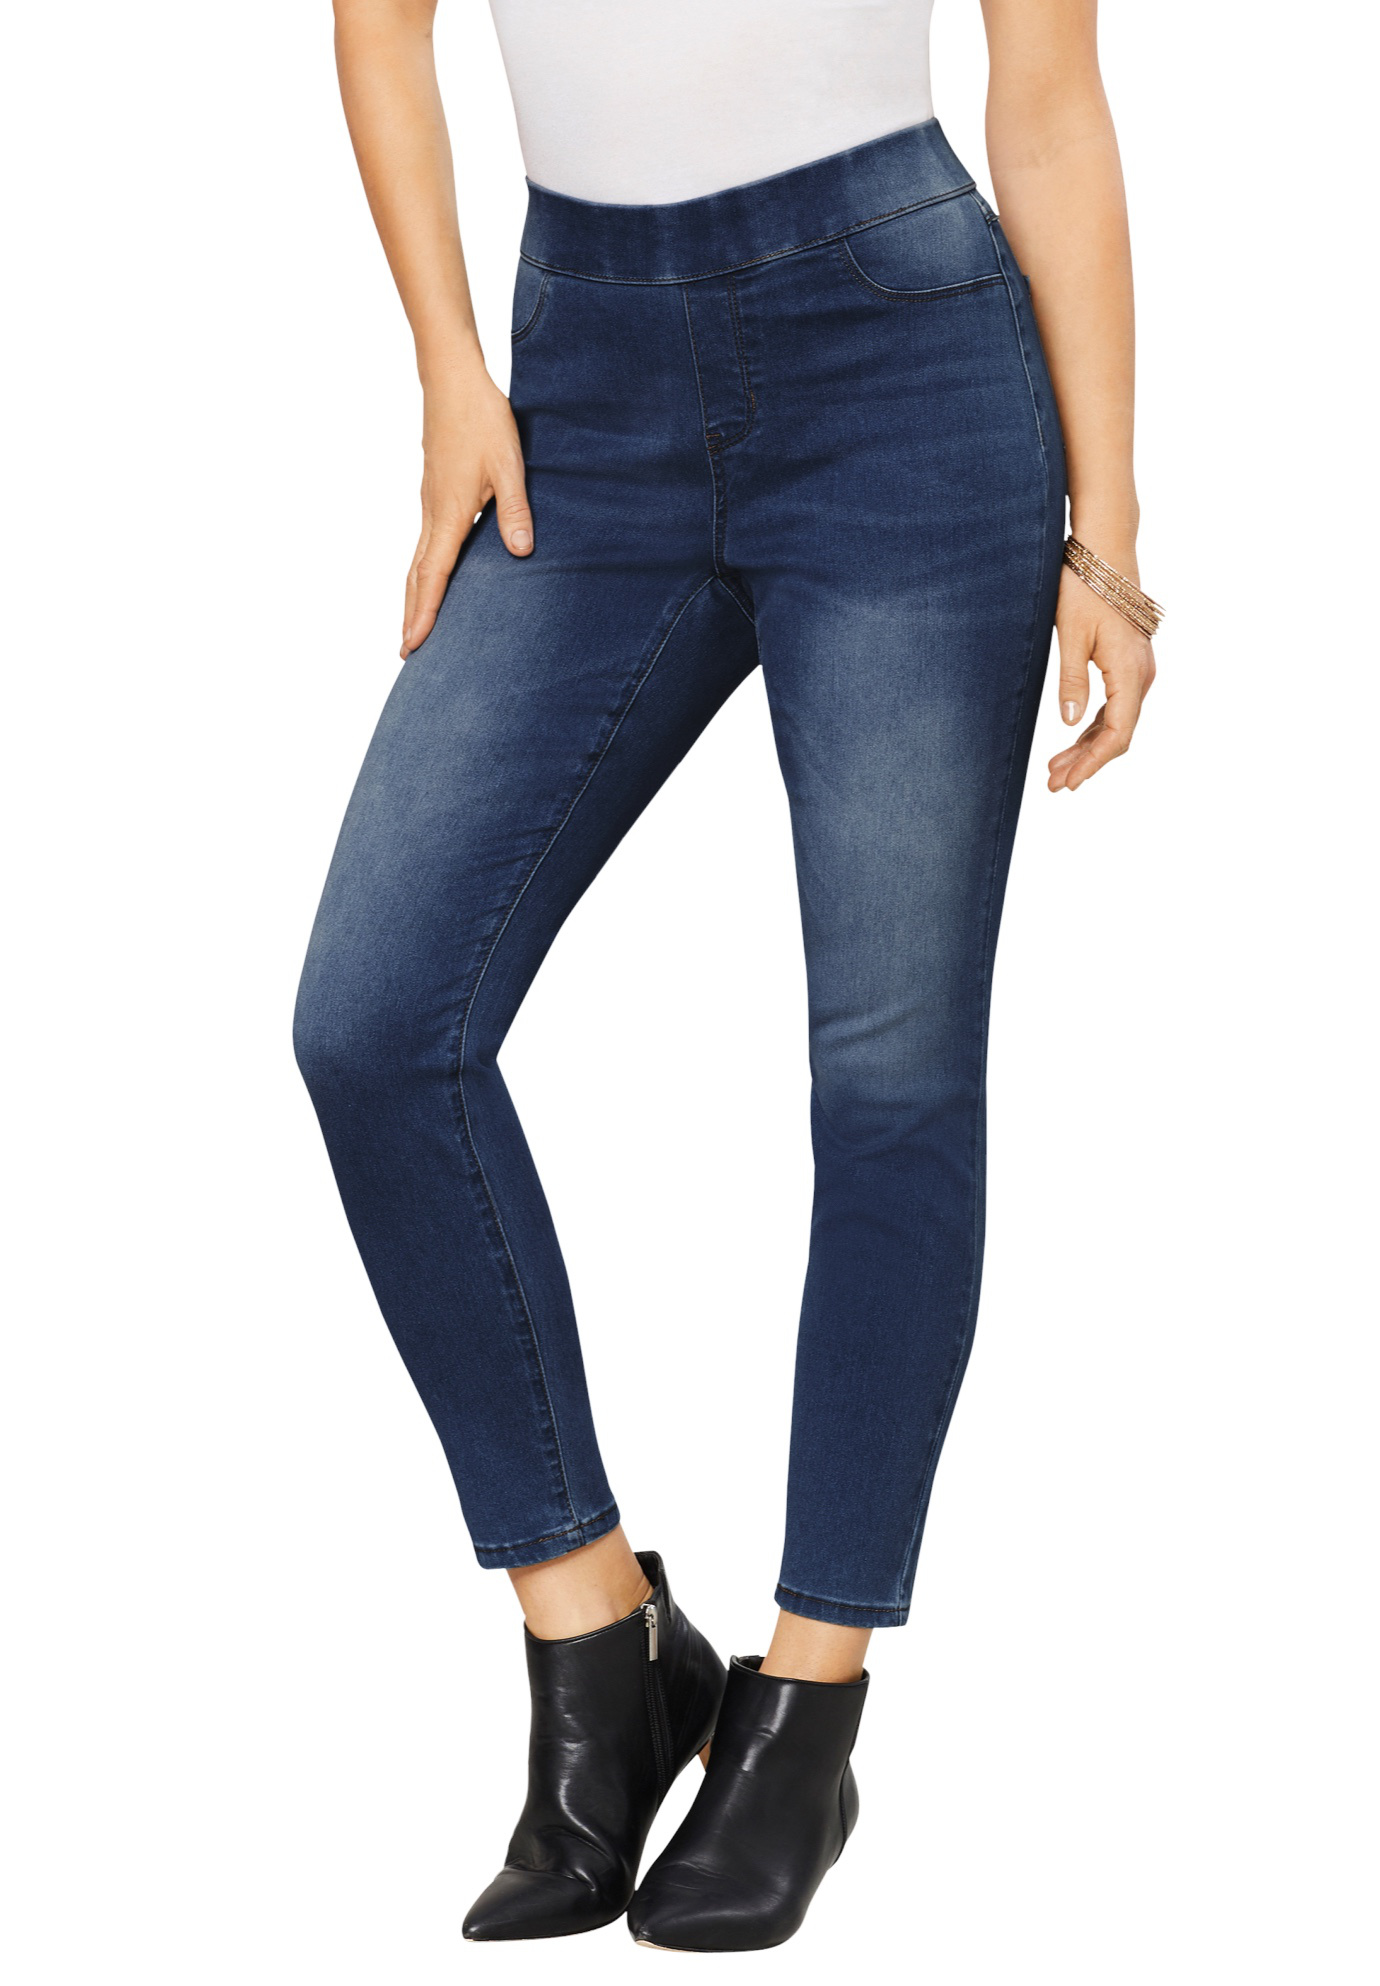 Roaman's Women's Plus Size 360° Stretch Jegging Pull On Jeans Denim Legging - image 1 of 6